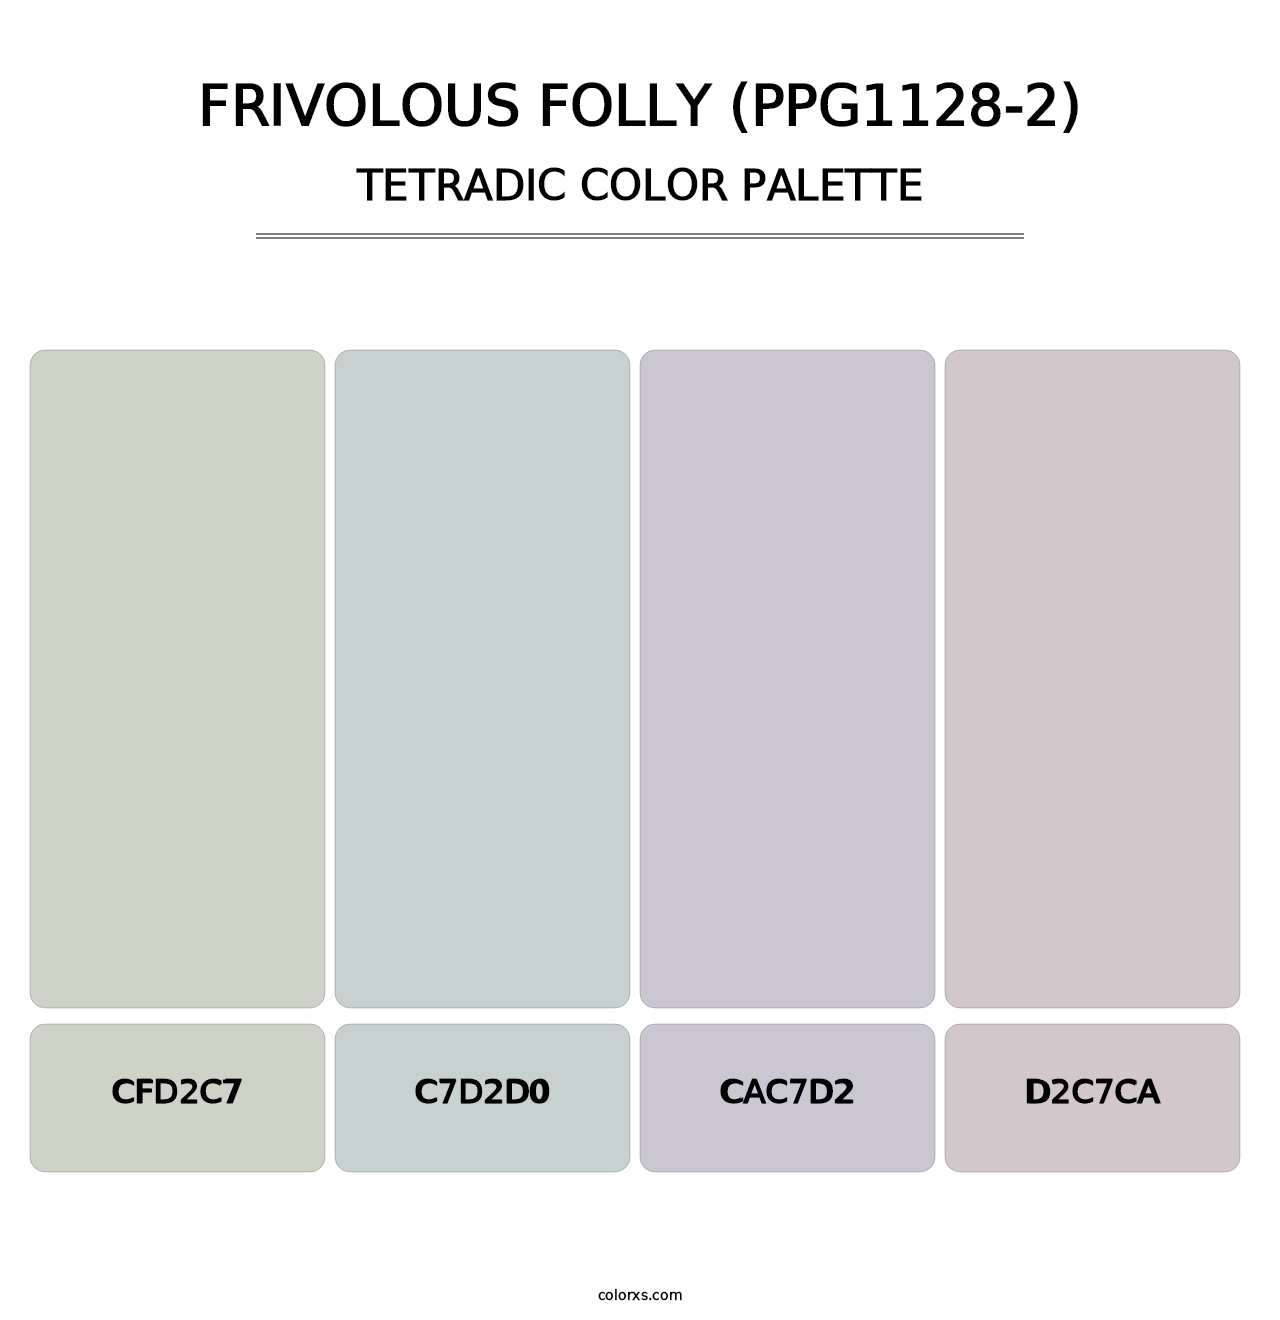 Frivolous Folly (PPG1128-2) - Tetradic Color Palette